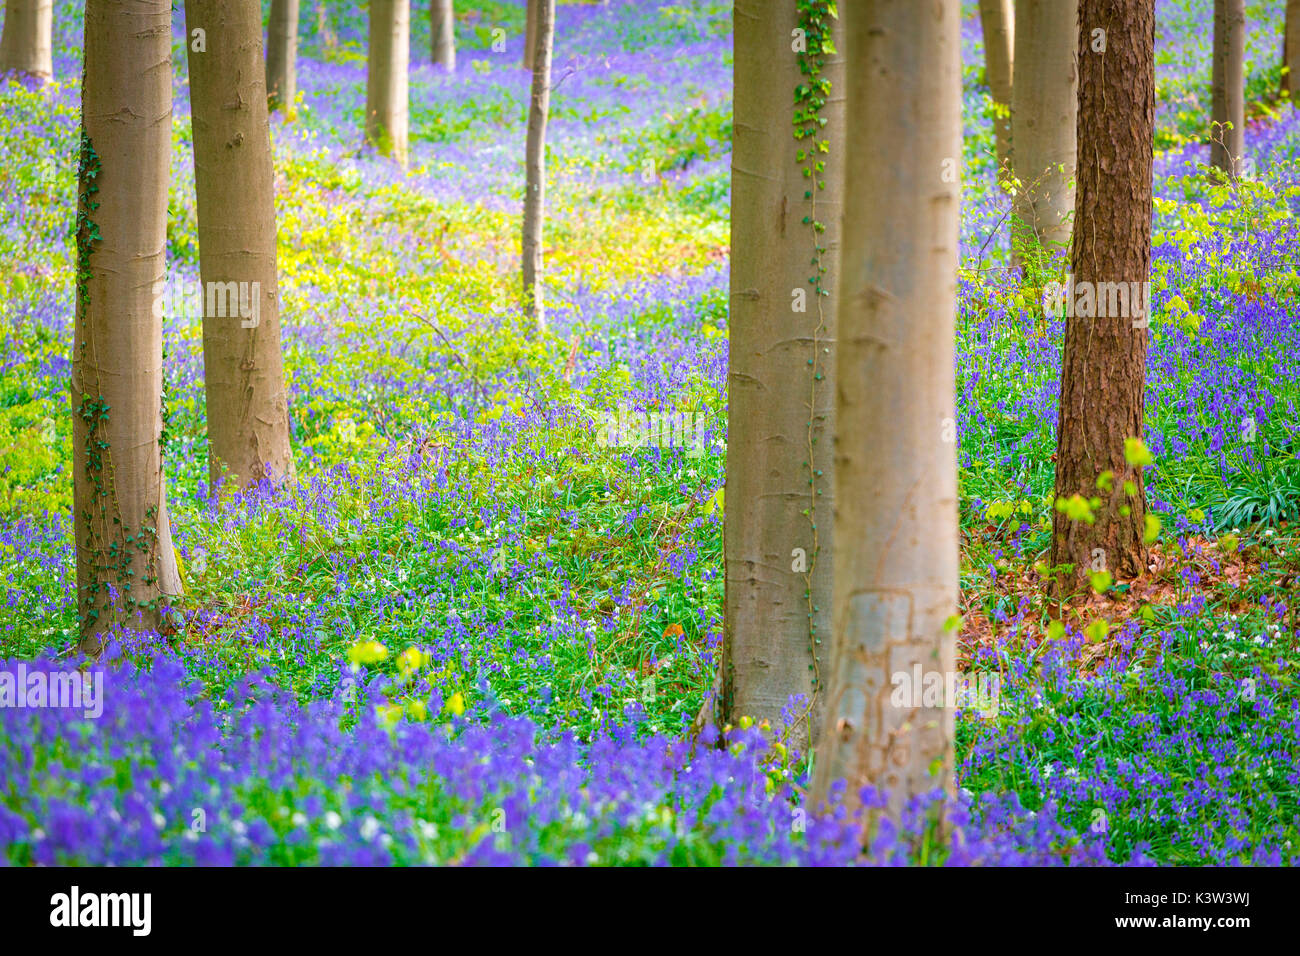 Hallerbos, beech forest in Belgium full of blue bells flowers. Stock Photo